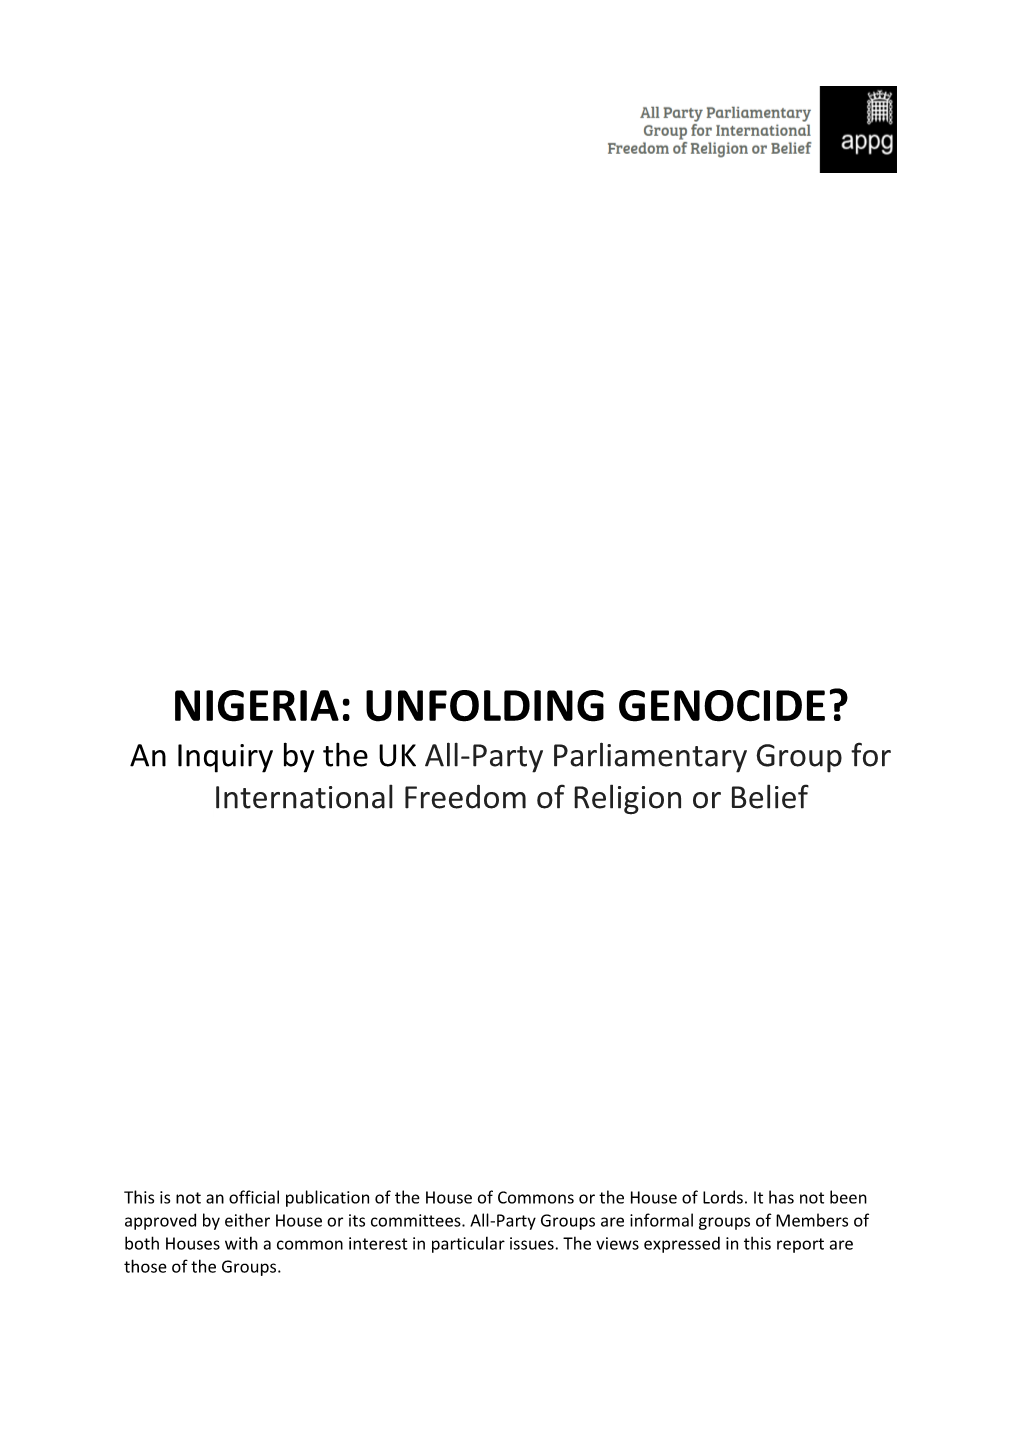 APPG Report Nigeria: Unfolding Genocide?